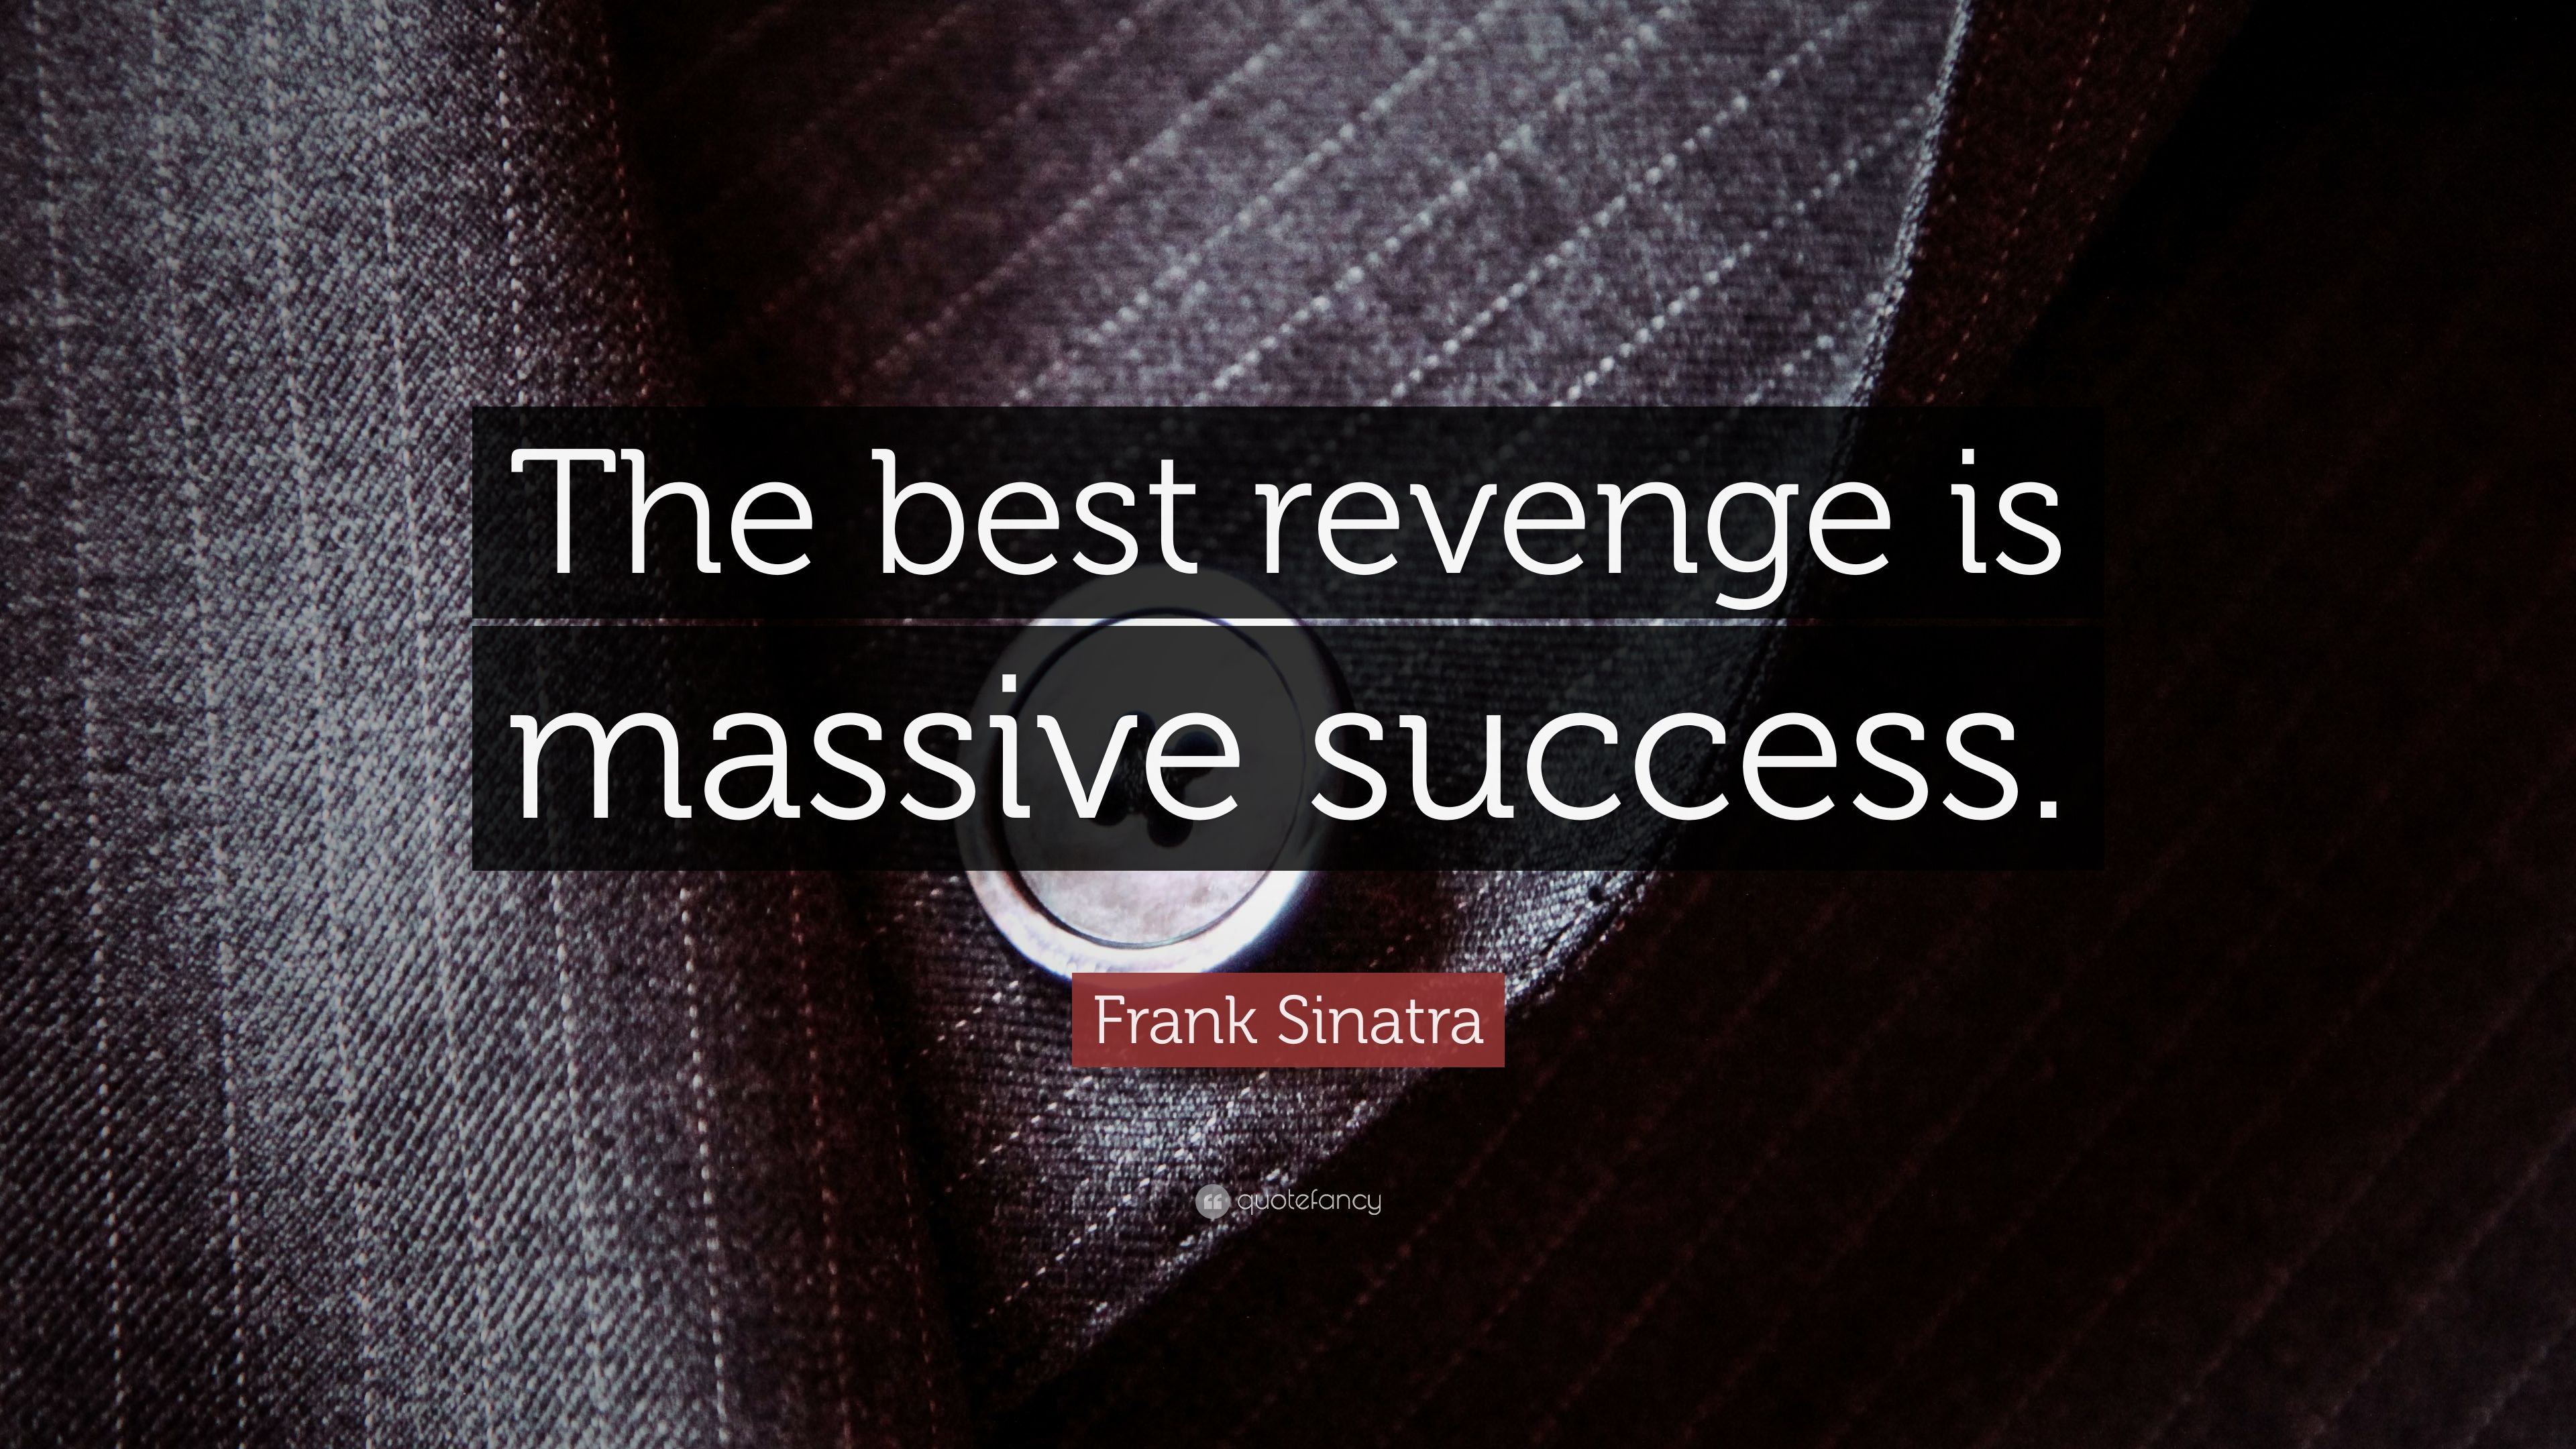 Frank Sinatra Quote: “The best revenge is massive success.”